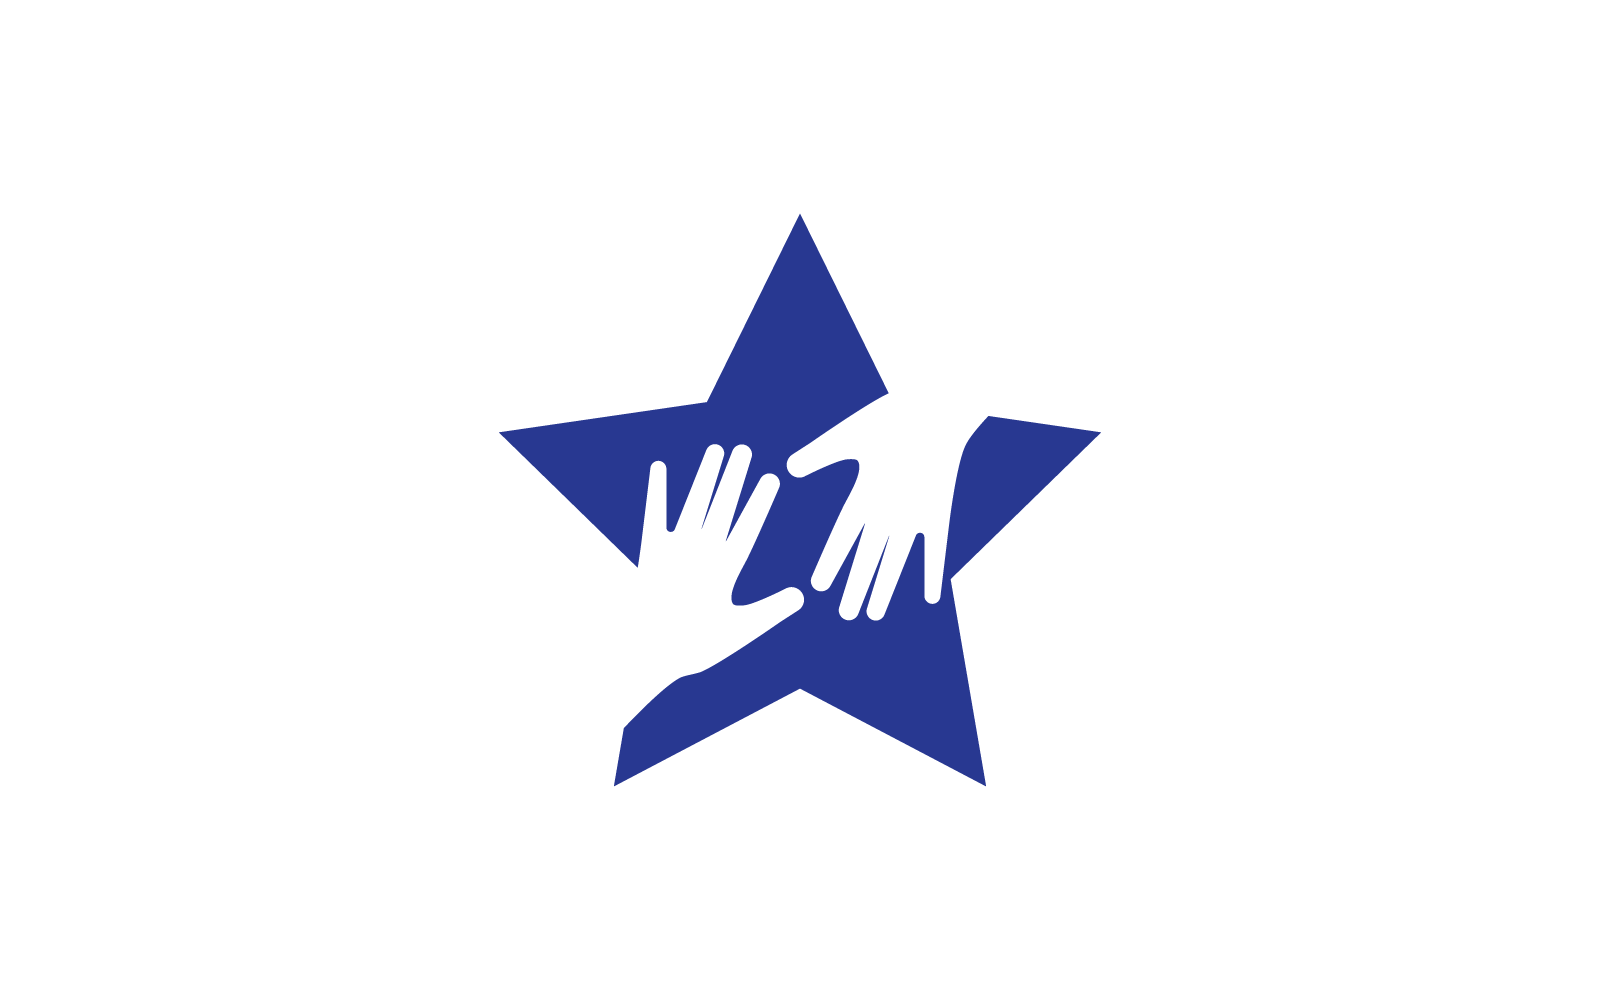 Hand and star logo illustration design